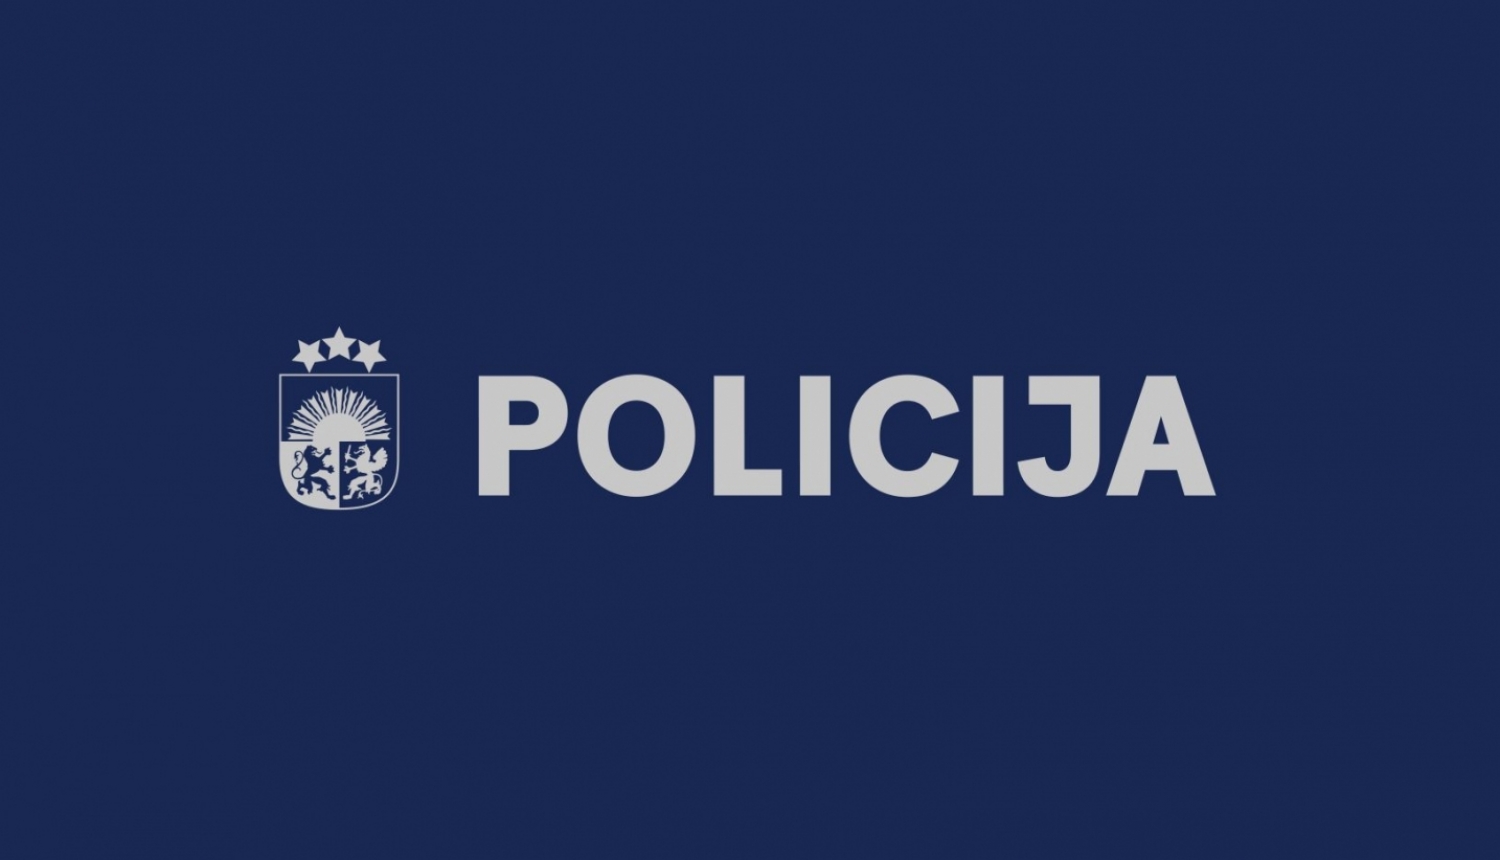 Valsts policijas logo